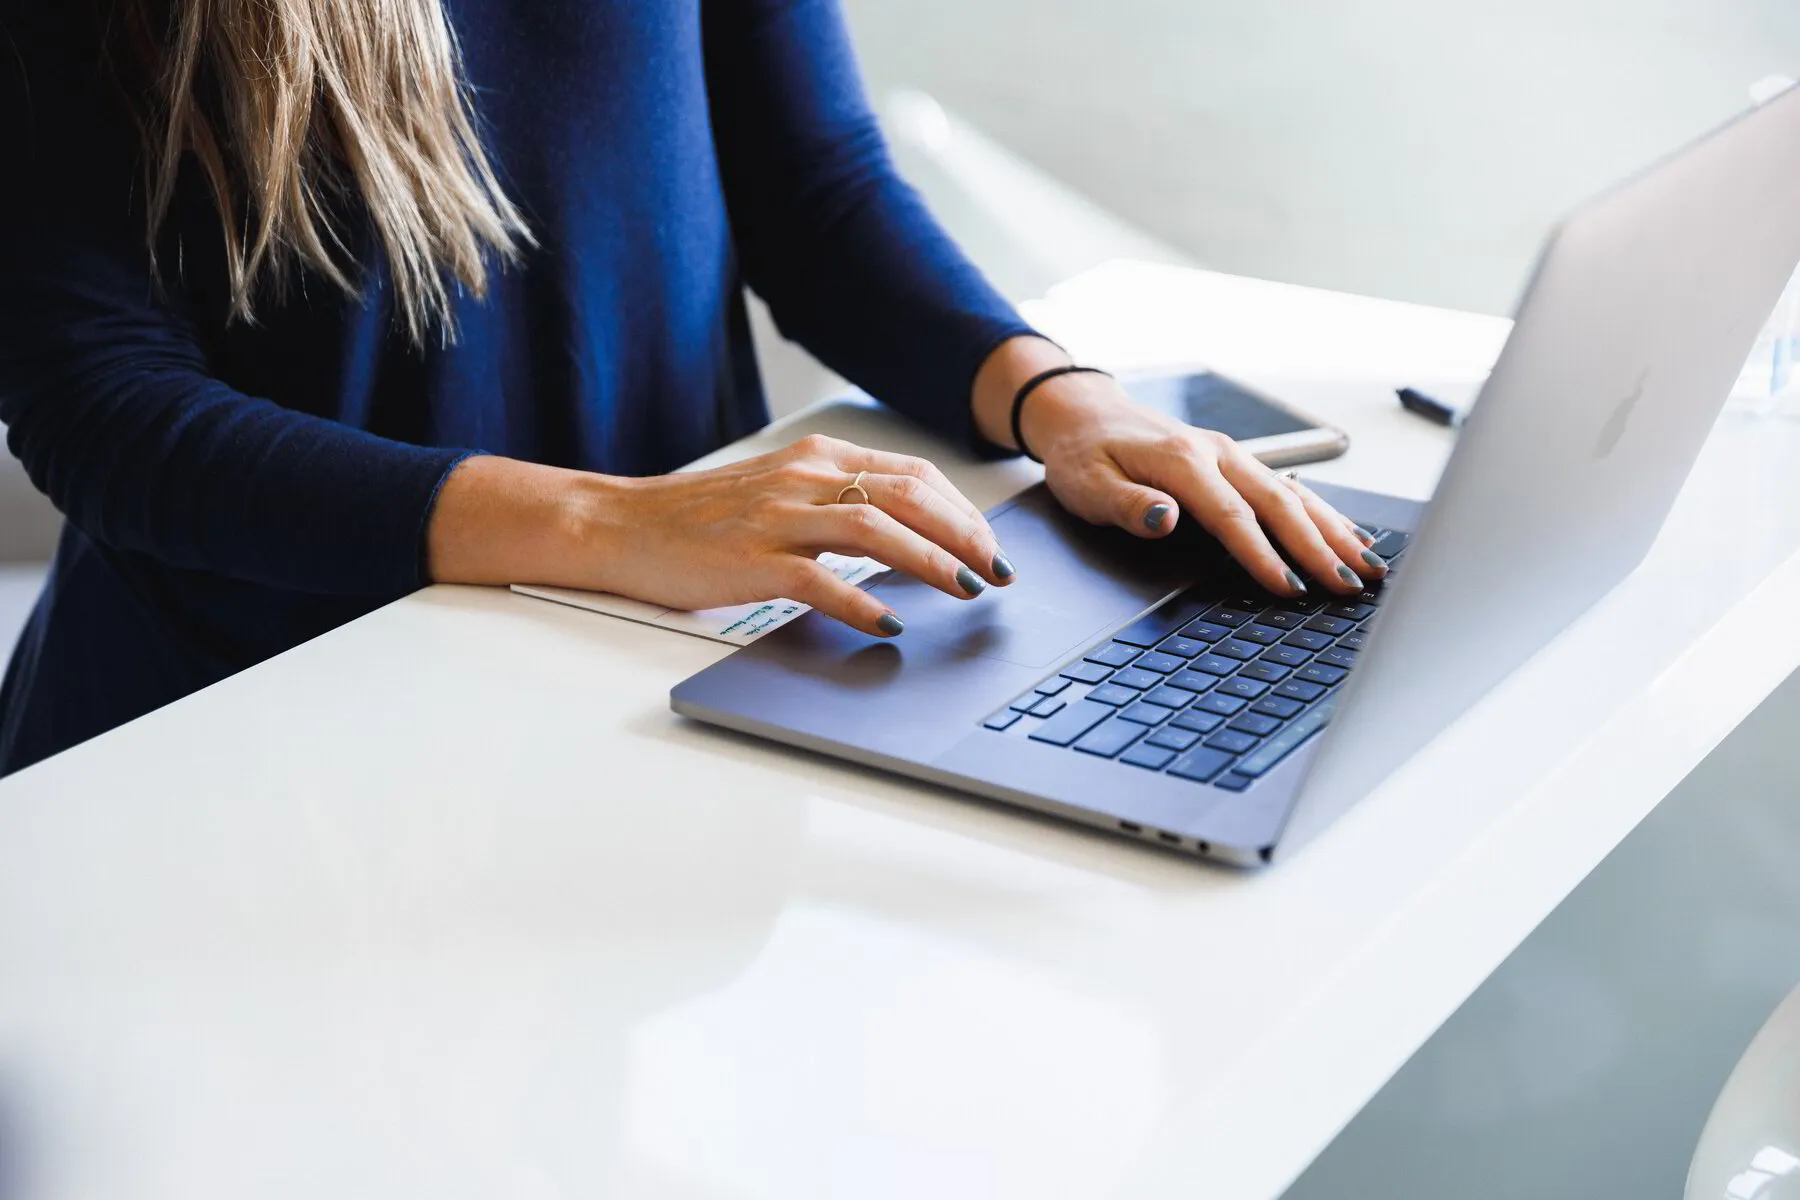 Woman in blue using laptop